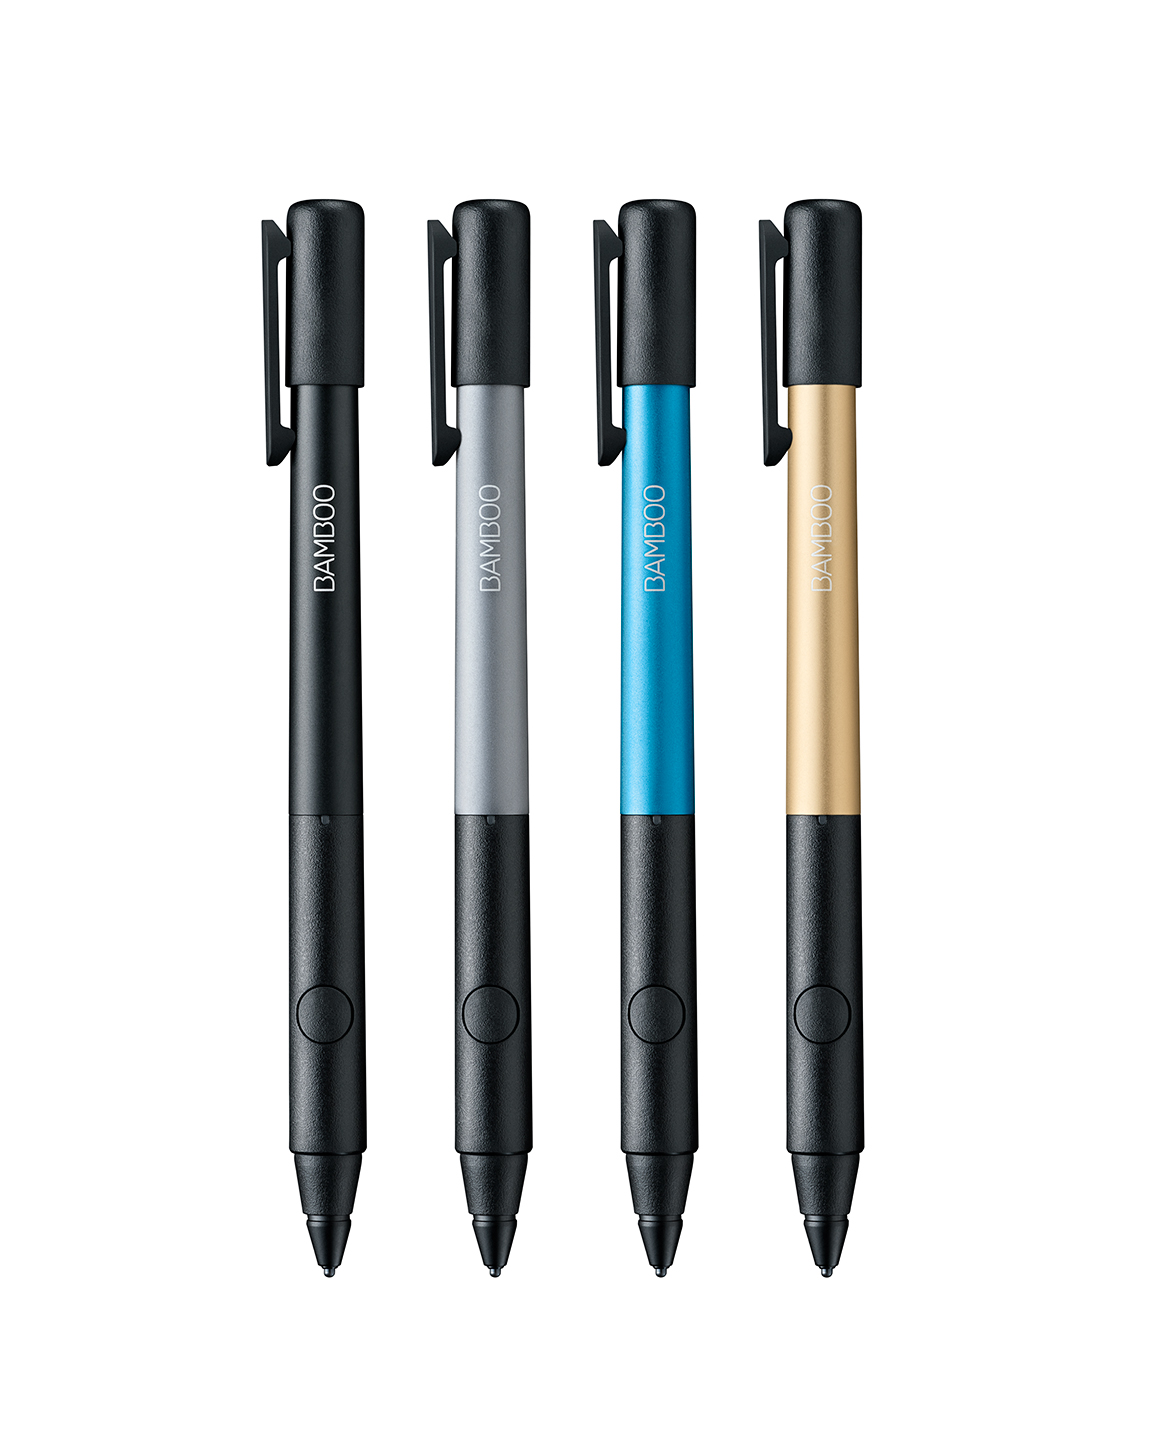 Wacom lanserar idag flera nya Bamboo-pennor på IFA Berlin 2015